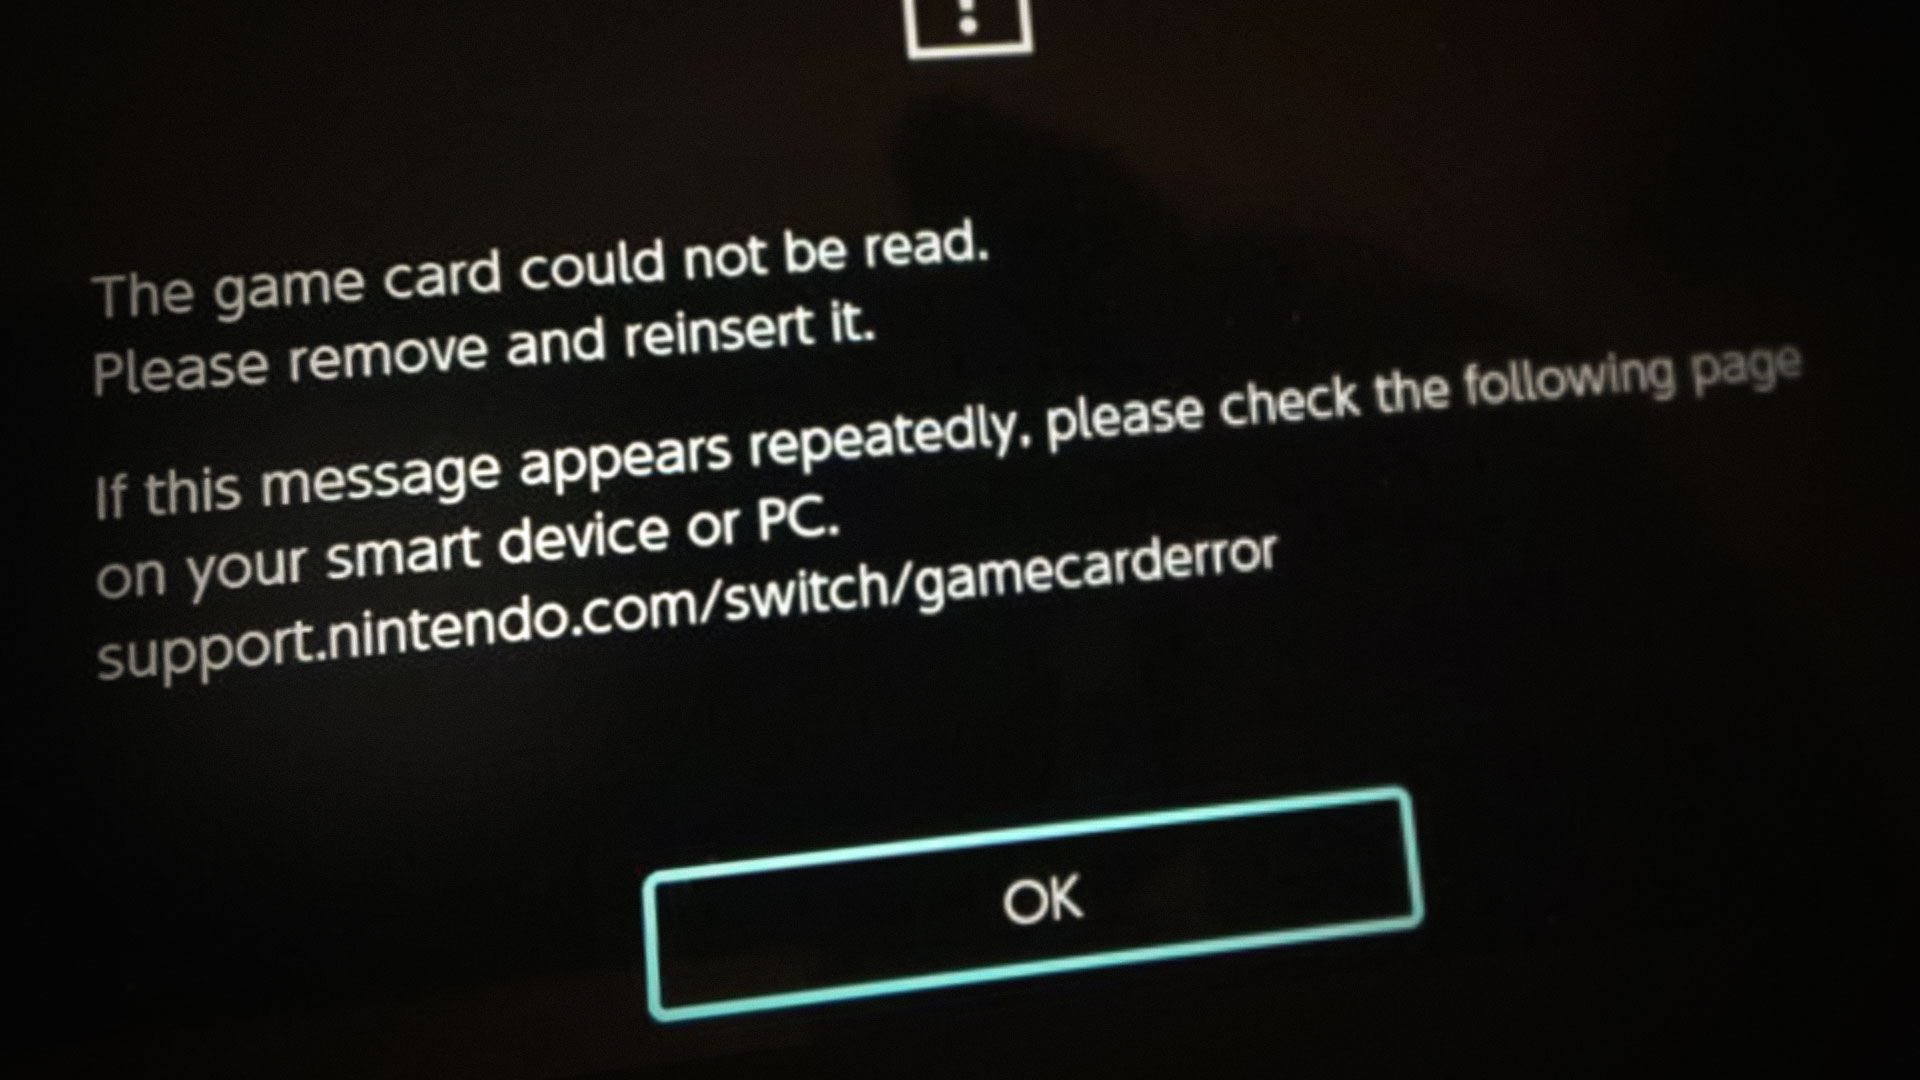 Nintendo Switch Game Card Error